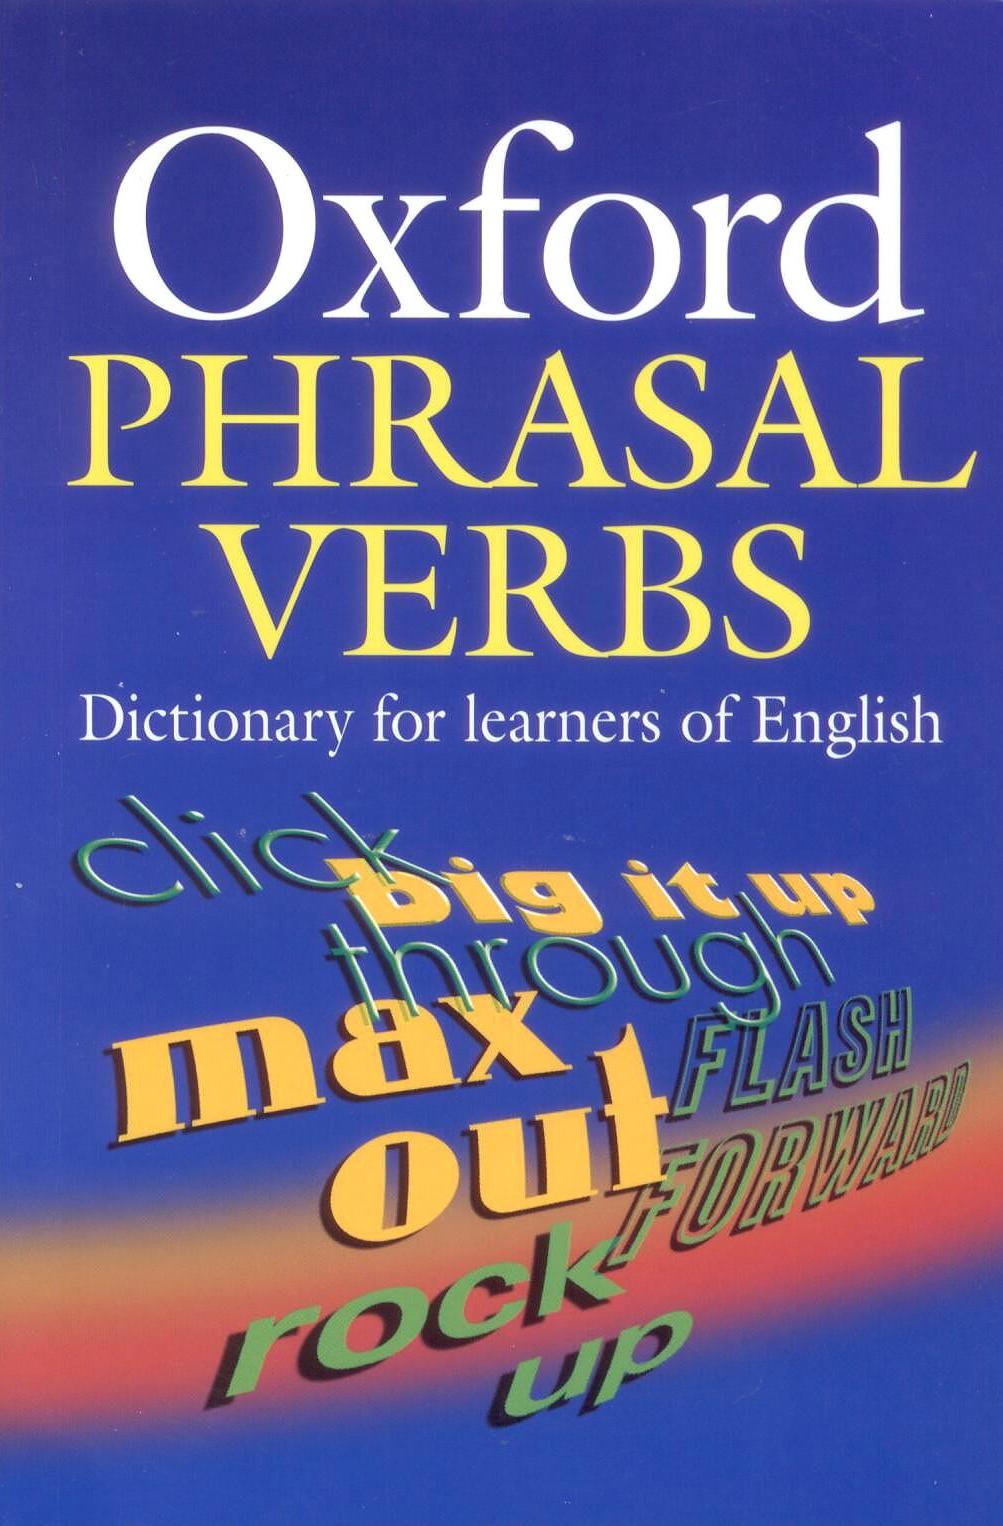 Oxford Phrasal Verbs Dictionary (2nd Edition)